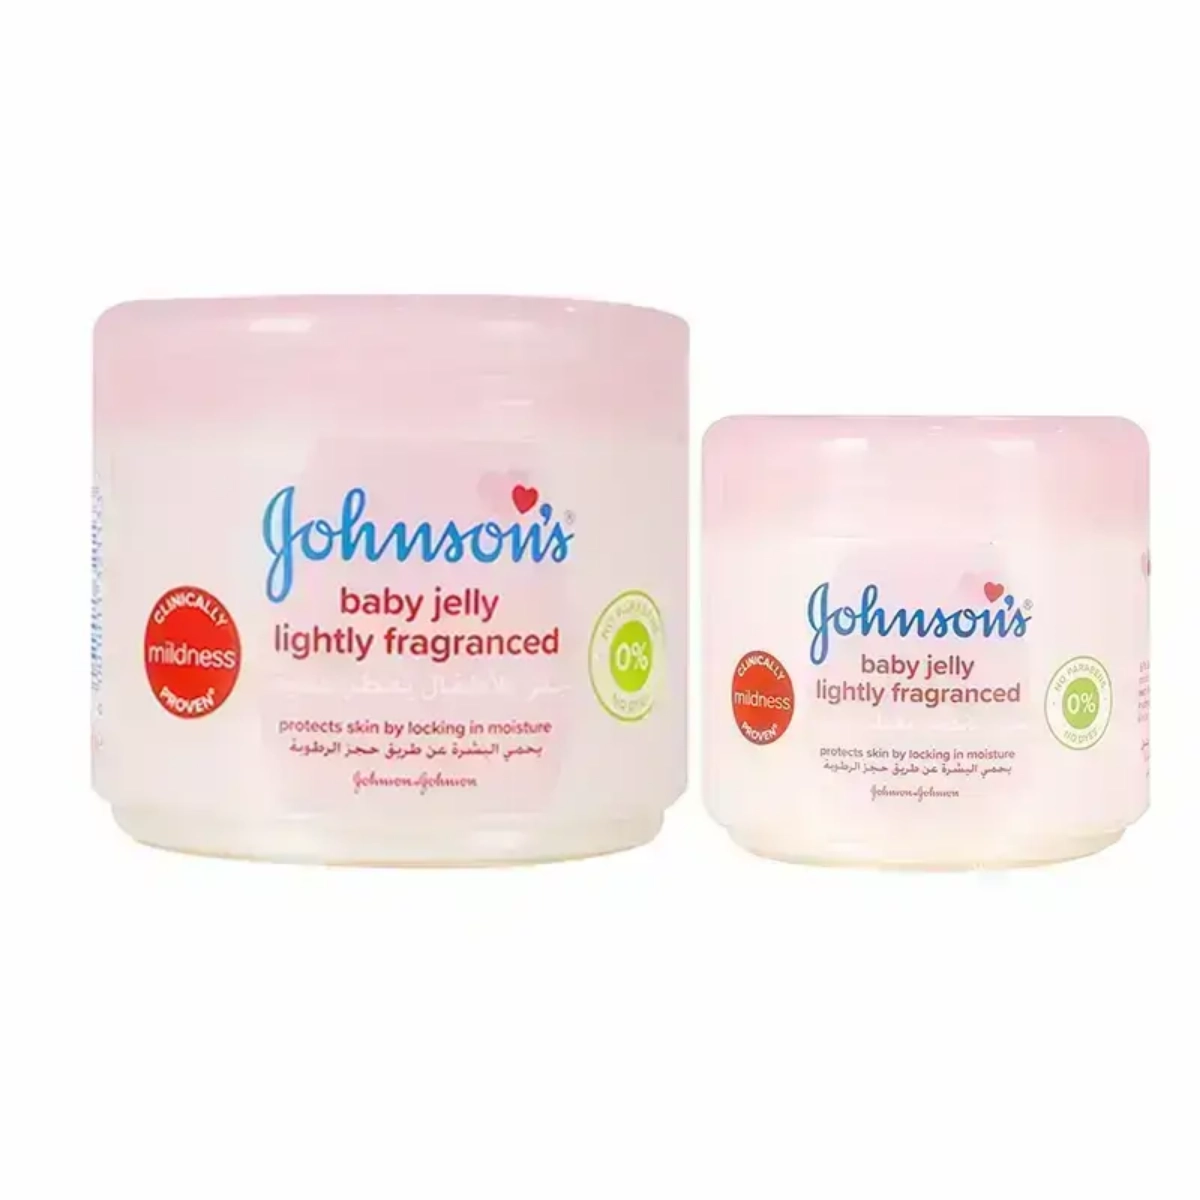 Shop Lightly Fragranced Johnson's Baby Jelly for Kids Online